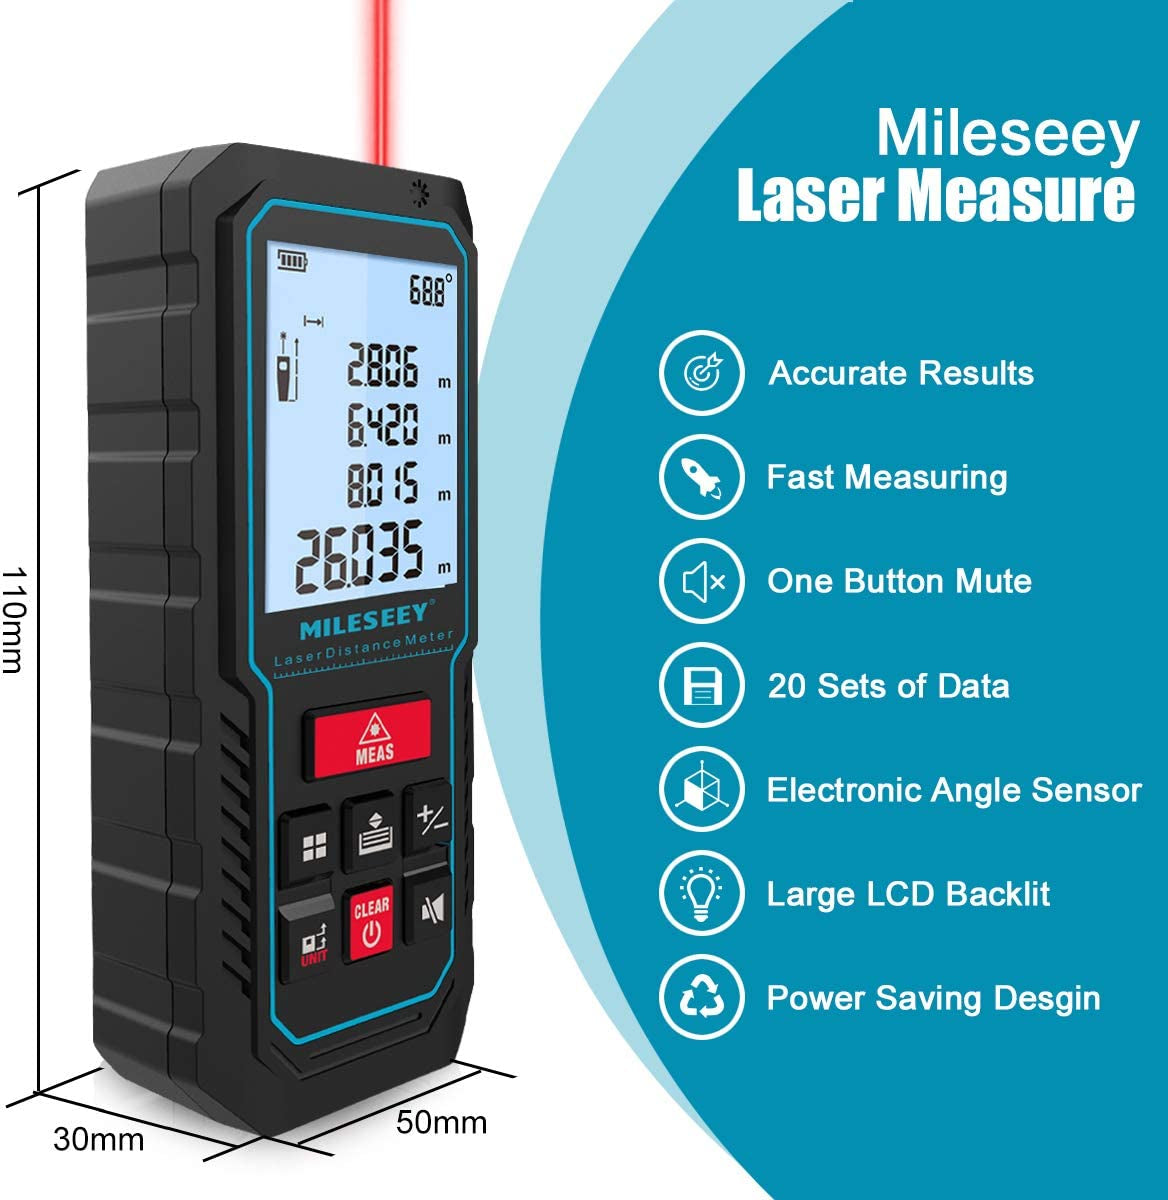 secretgreen.com.au, Laser Measure, 229Ft M/In/Ft Digital Distance Meter, Laser Measurement Tool with Electronic Angle Sensor, Backlit LCD, Pythagorean Mode, Measuring Distance, Area and Volume